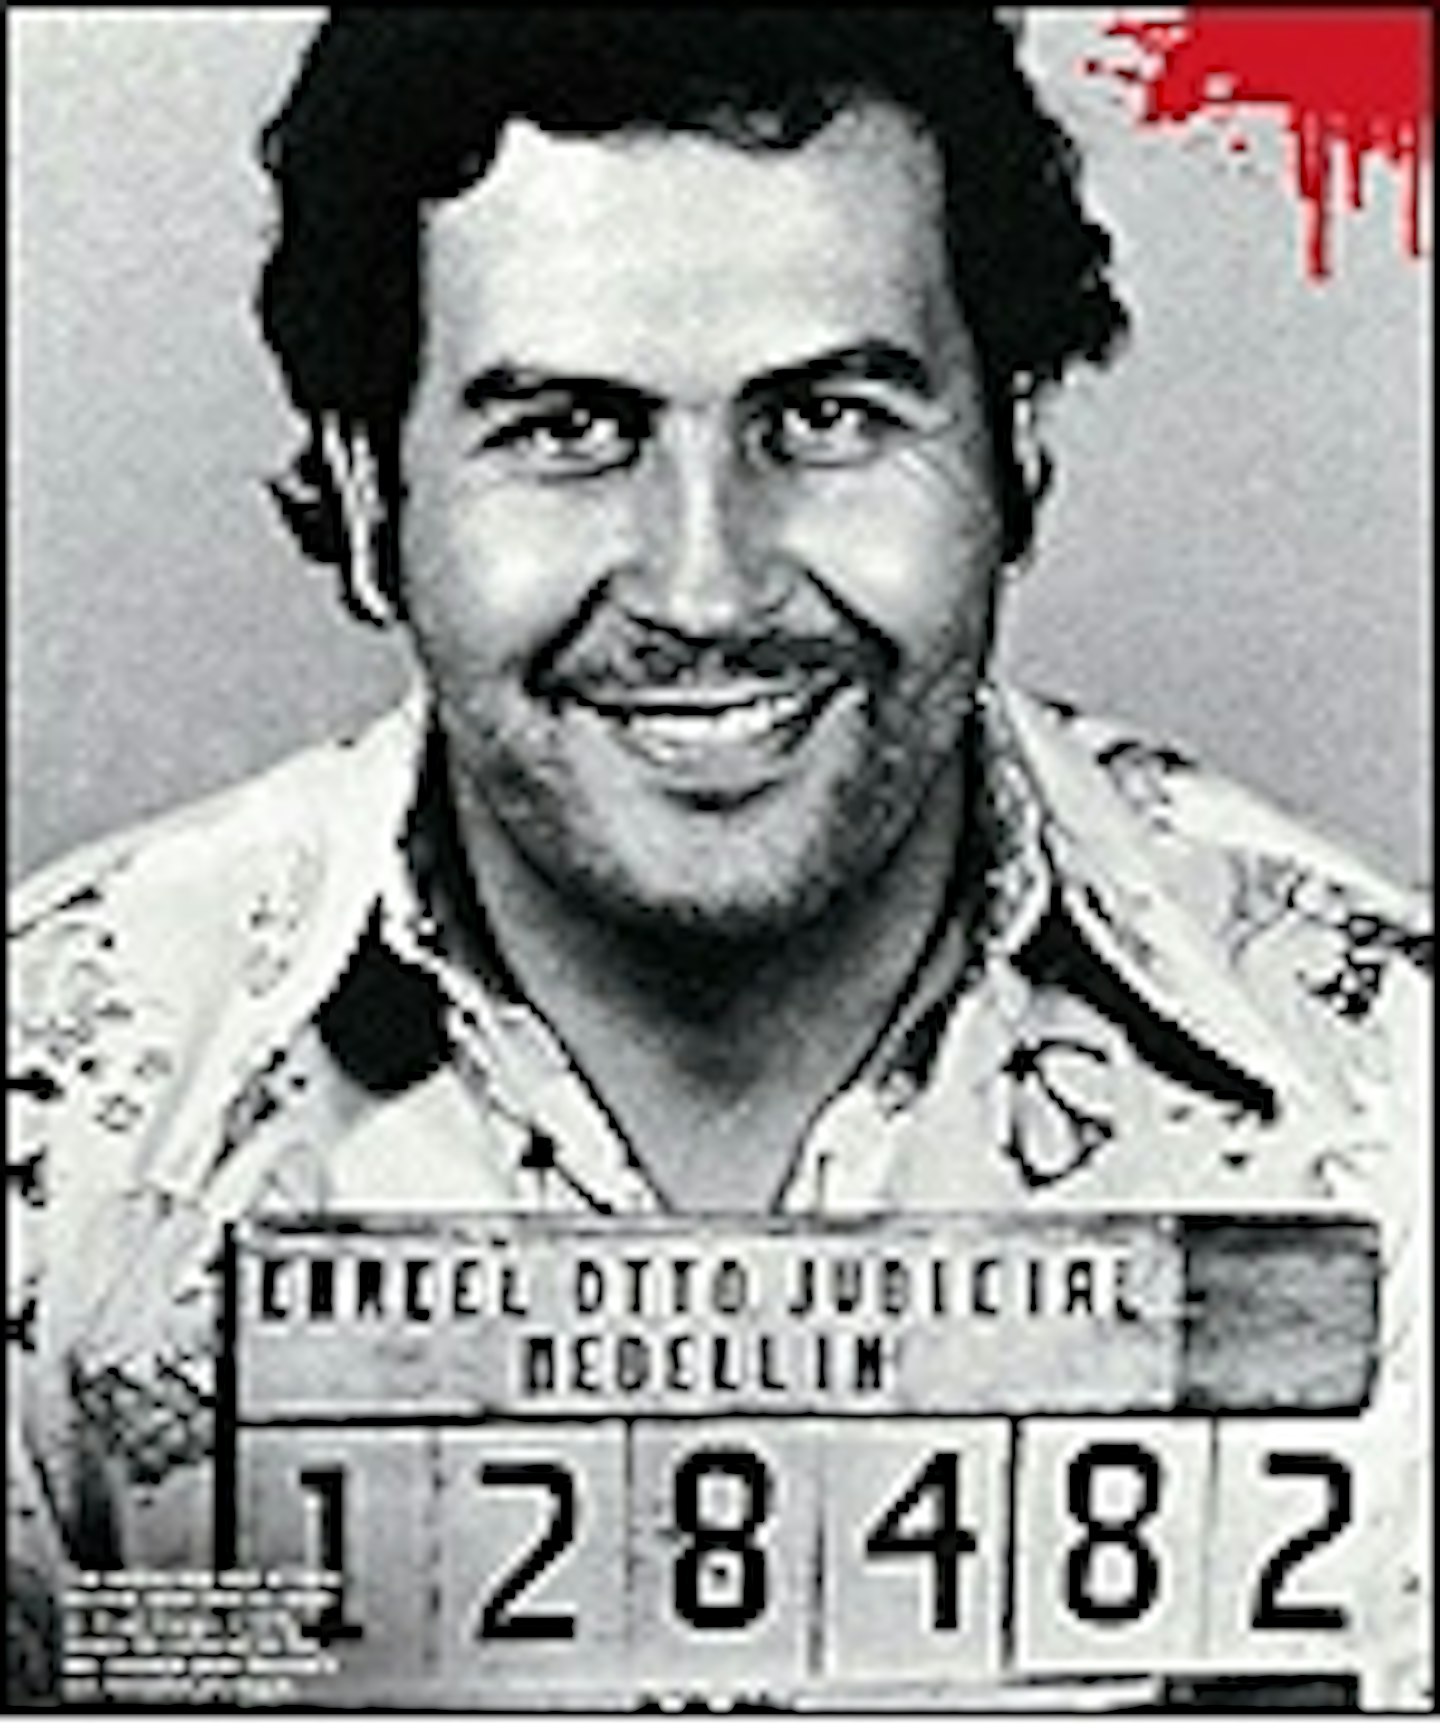 Brad Furman Planning Escobar Biopic